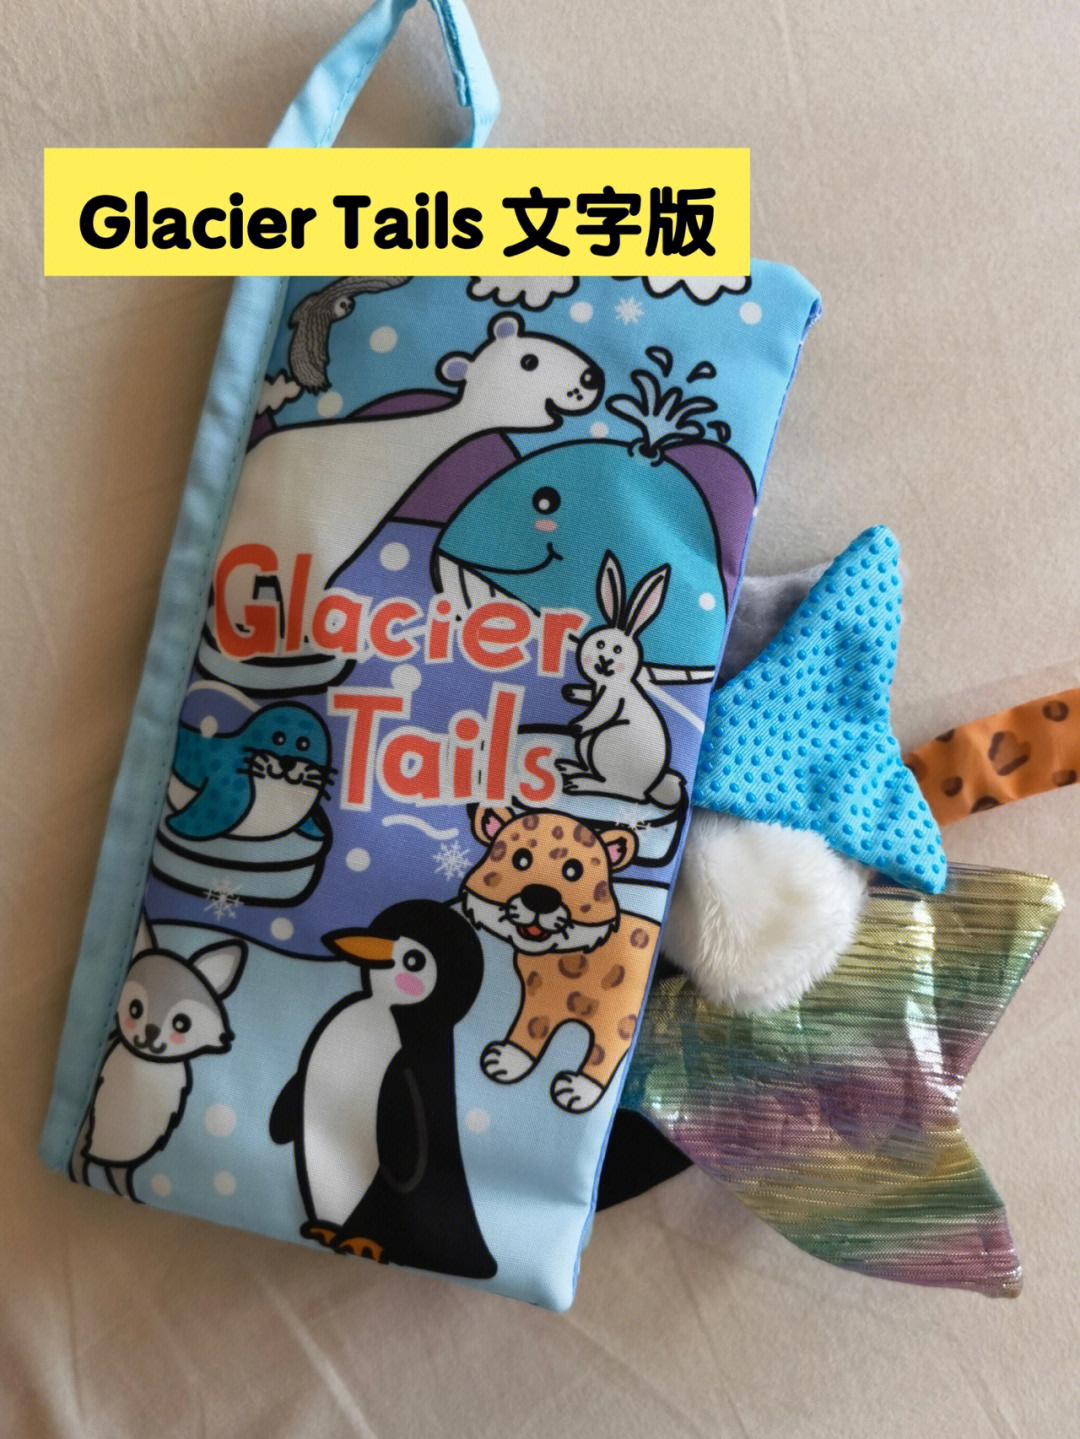 glacier tails图片